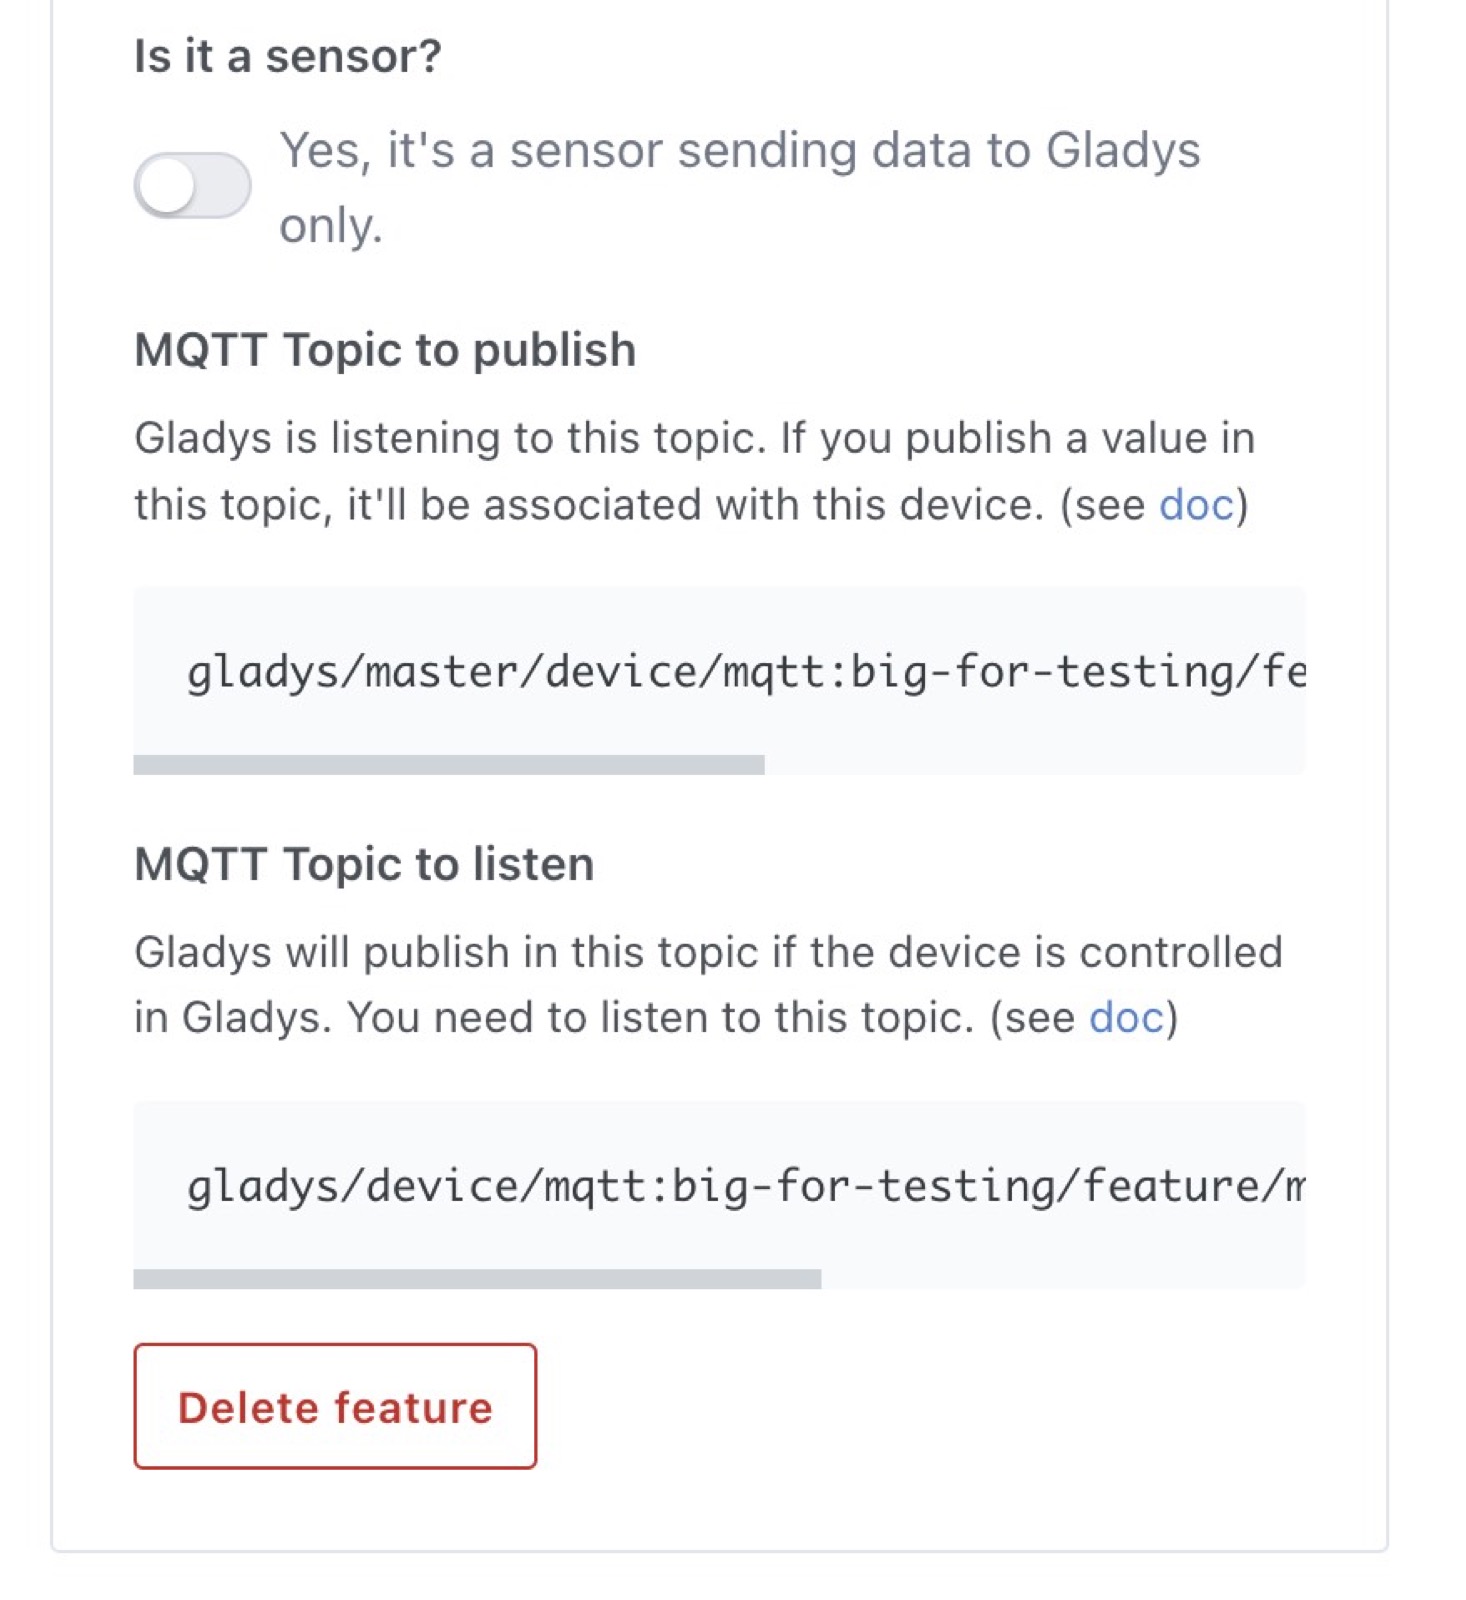 MQTT not a sensor